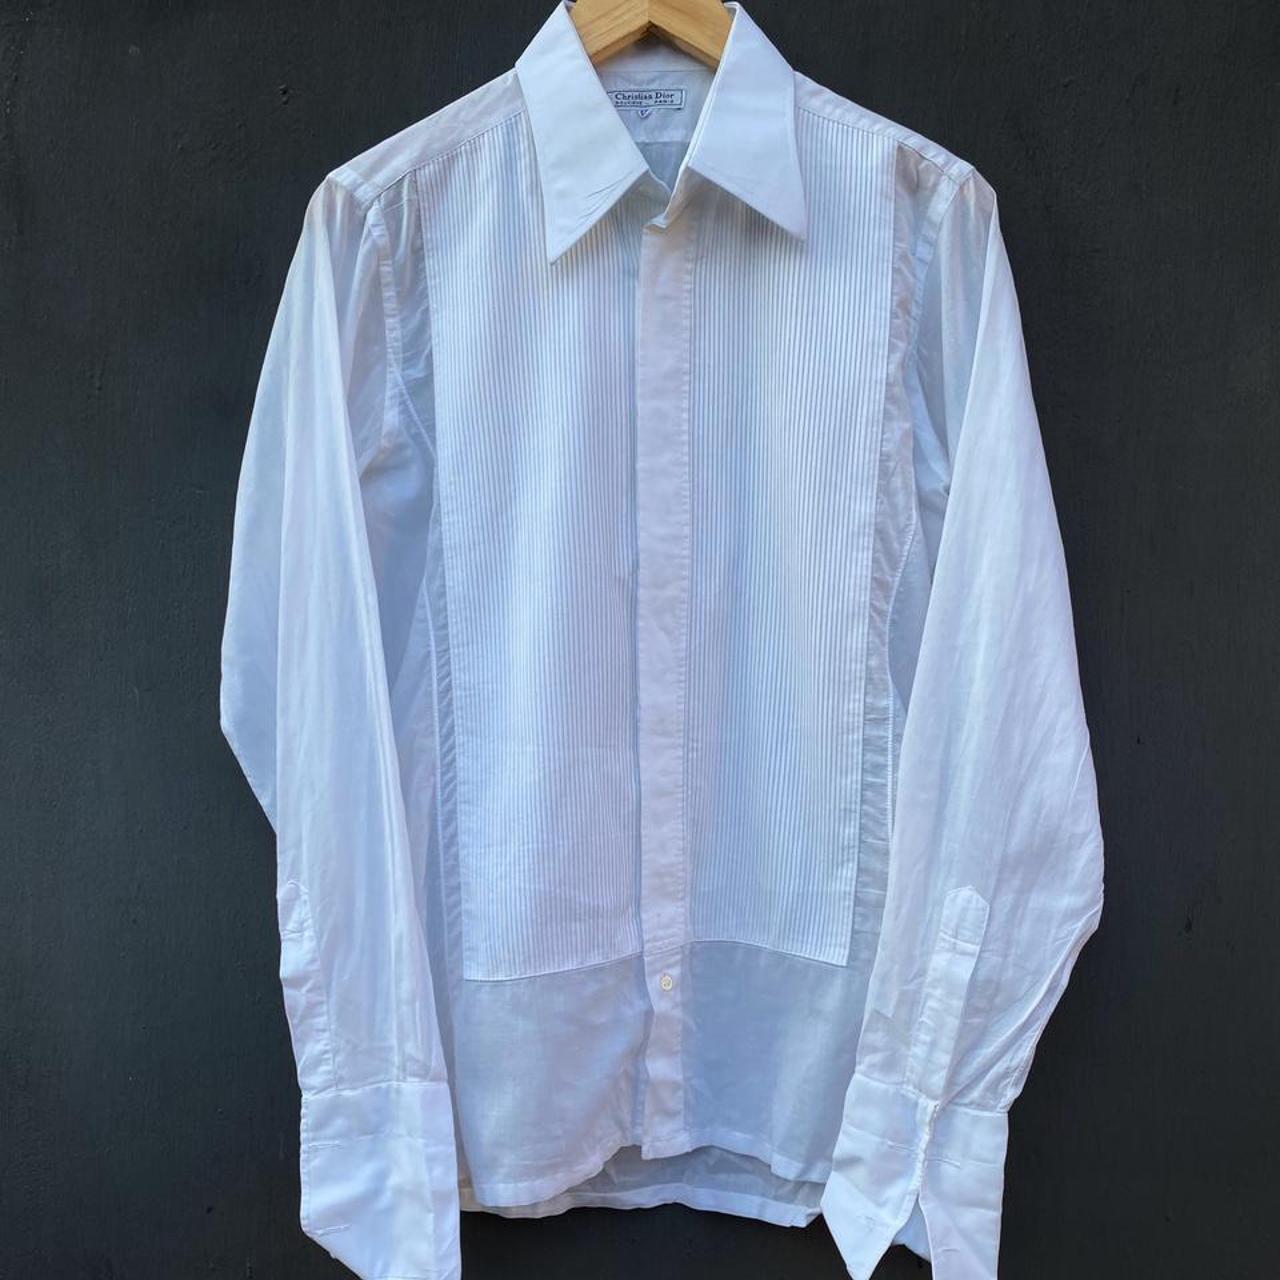 Christian Dior vintage white shirt size 40... - Depop